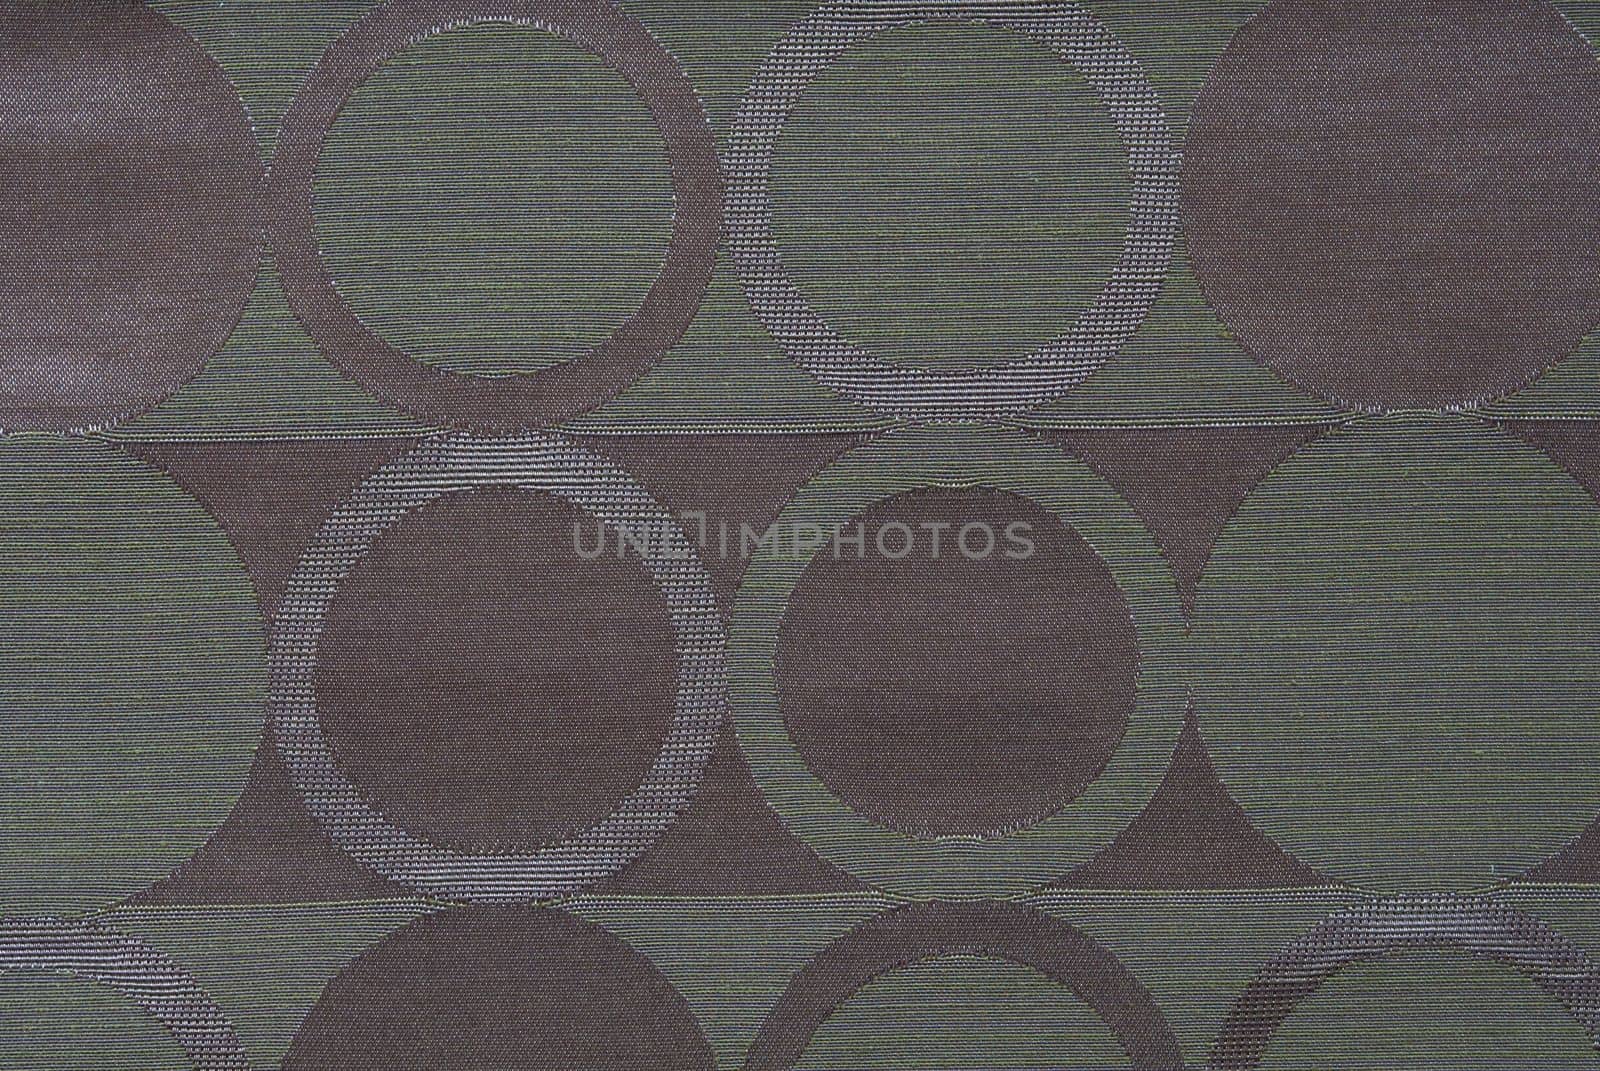 Closeup texture of fabric weave by rakoptonLPN